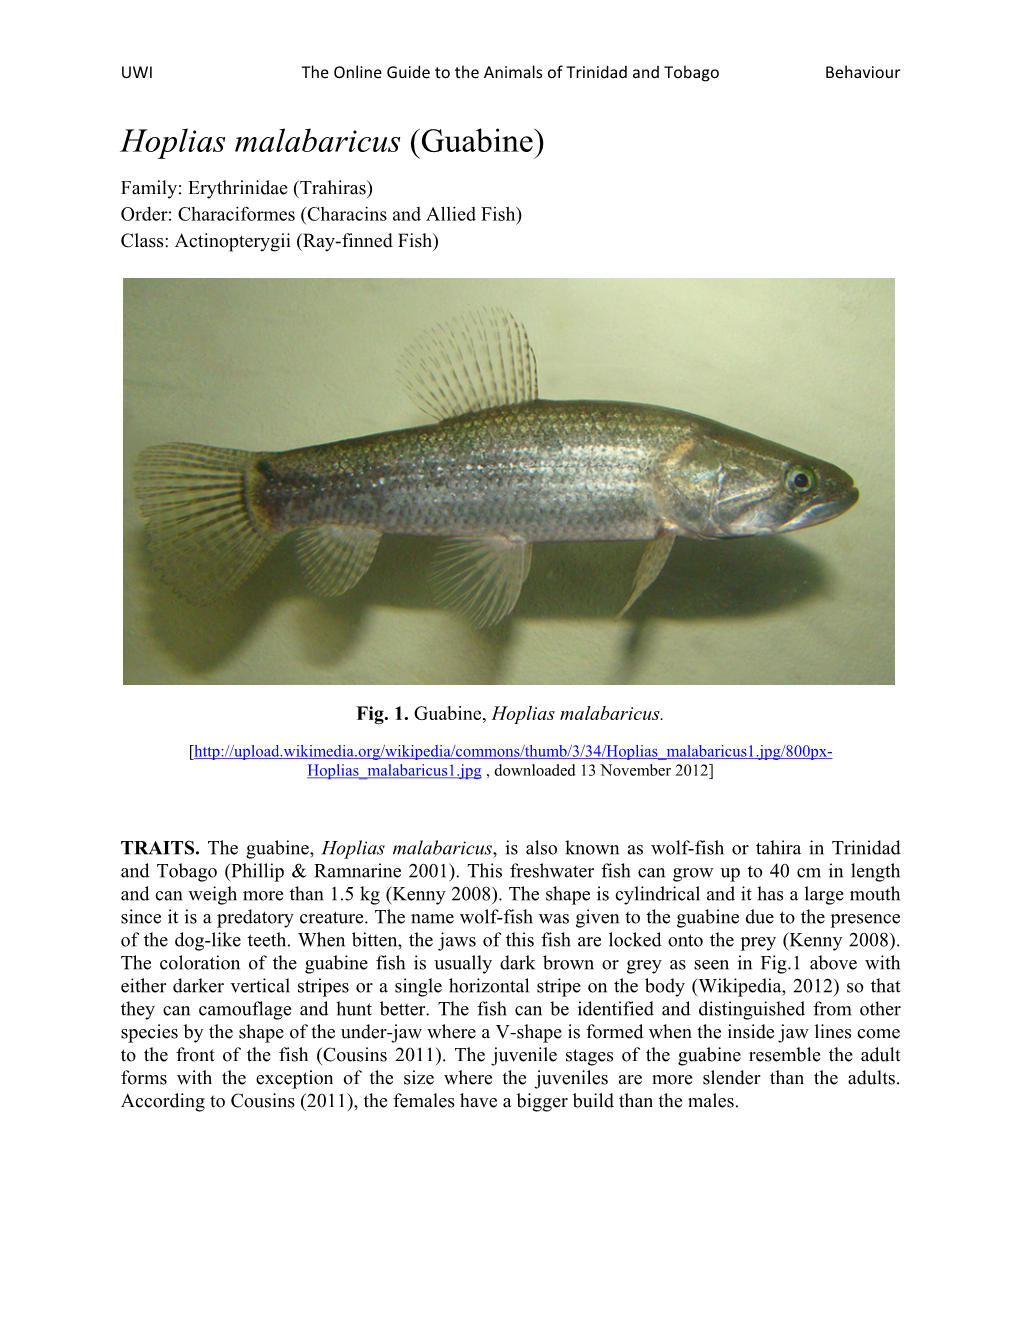 Hoplias Malabaricus (Guabine) Family: Erythrinidae (Trahiras) Order: Characiformes (Characins and Allied Fish) Class: Actinopterygii (Ray-Finned Fish)